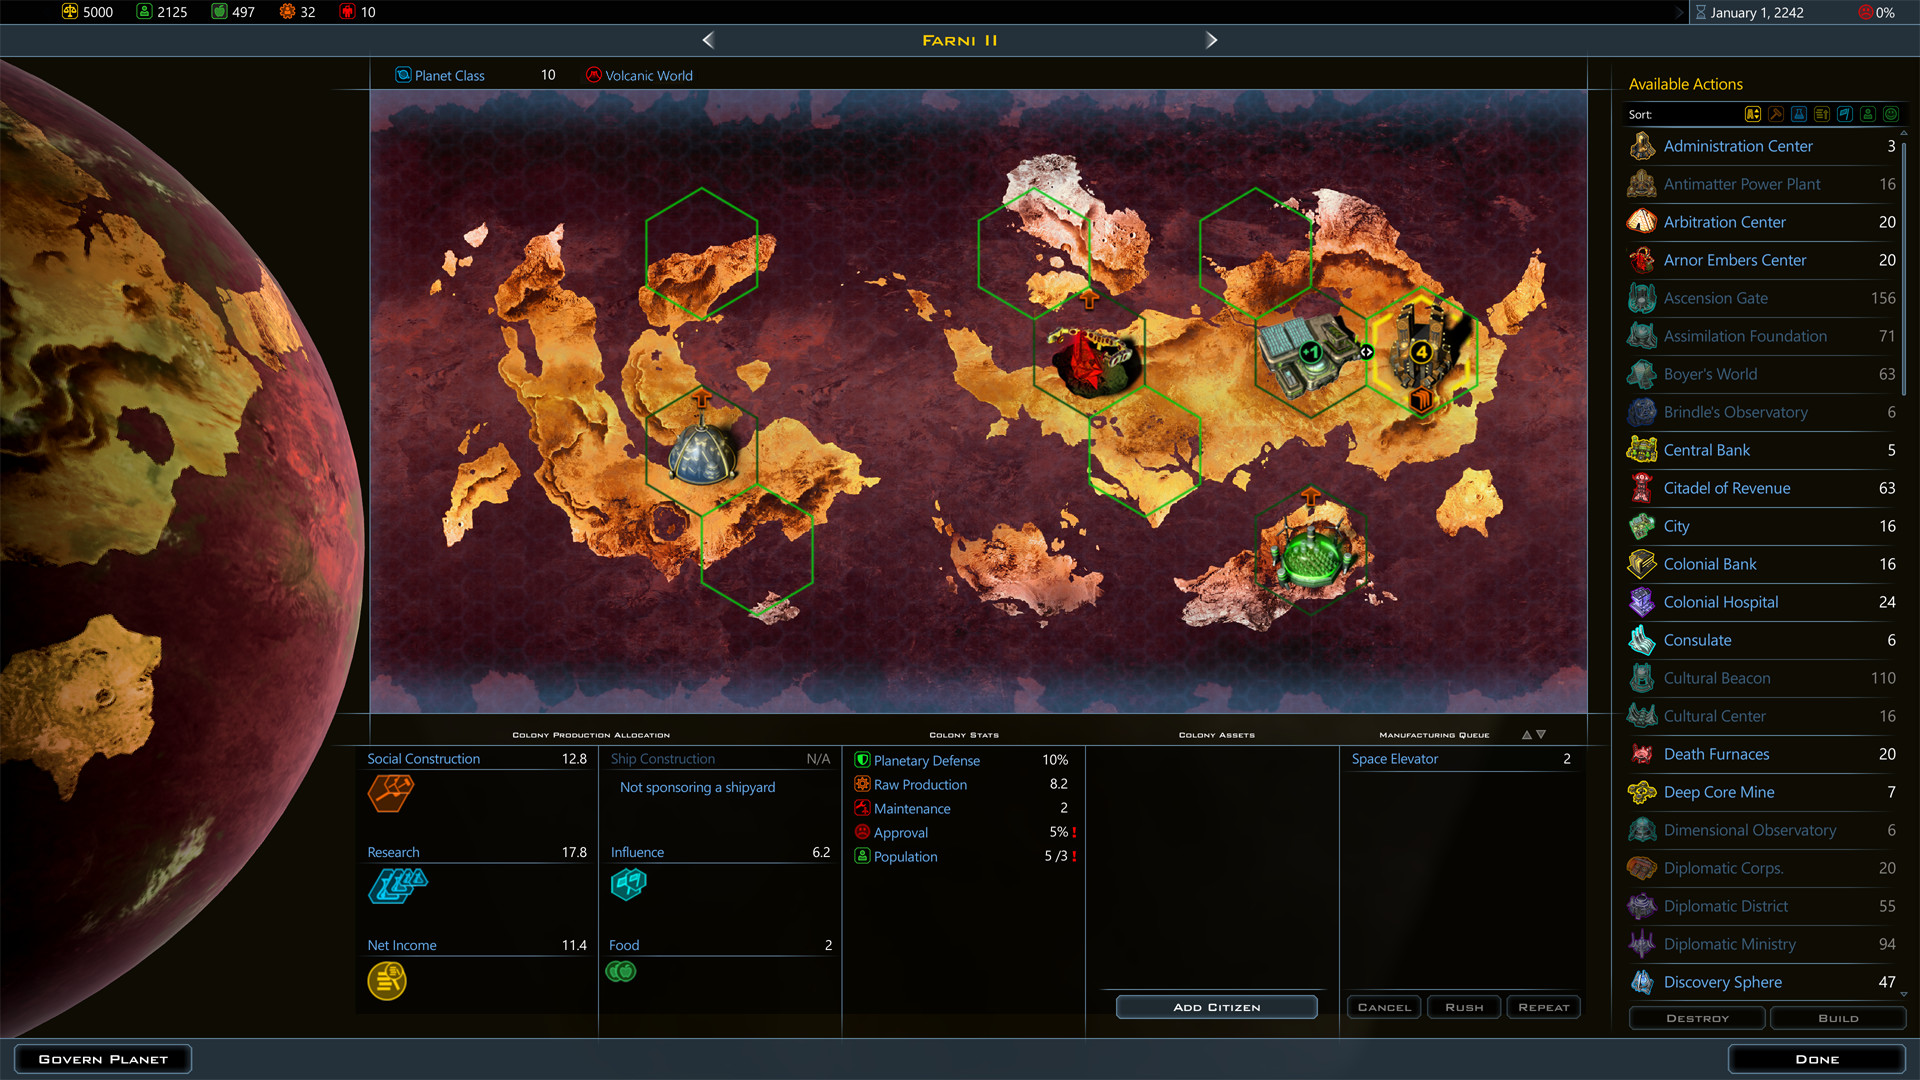 Galactic Civilizations III - Worlds in Crisis DLC Steam CD Key 5.64 usd